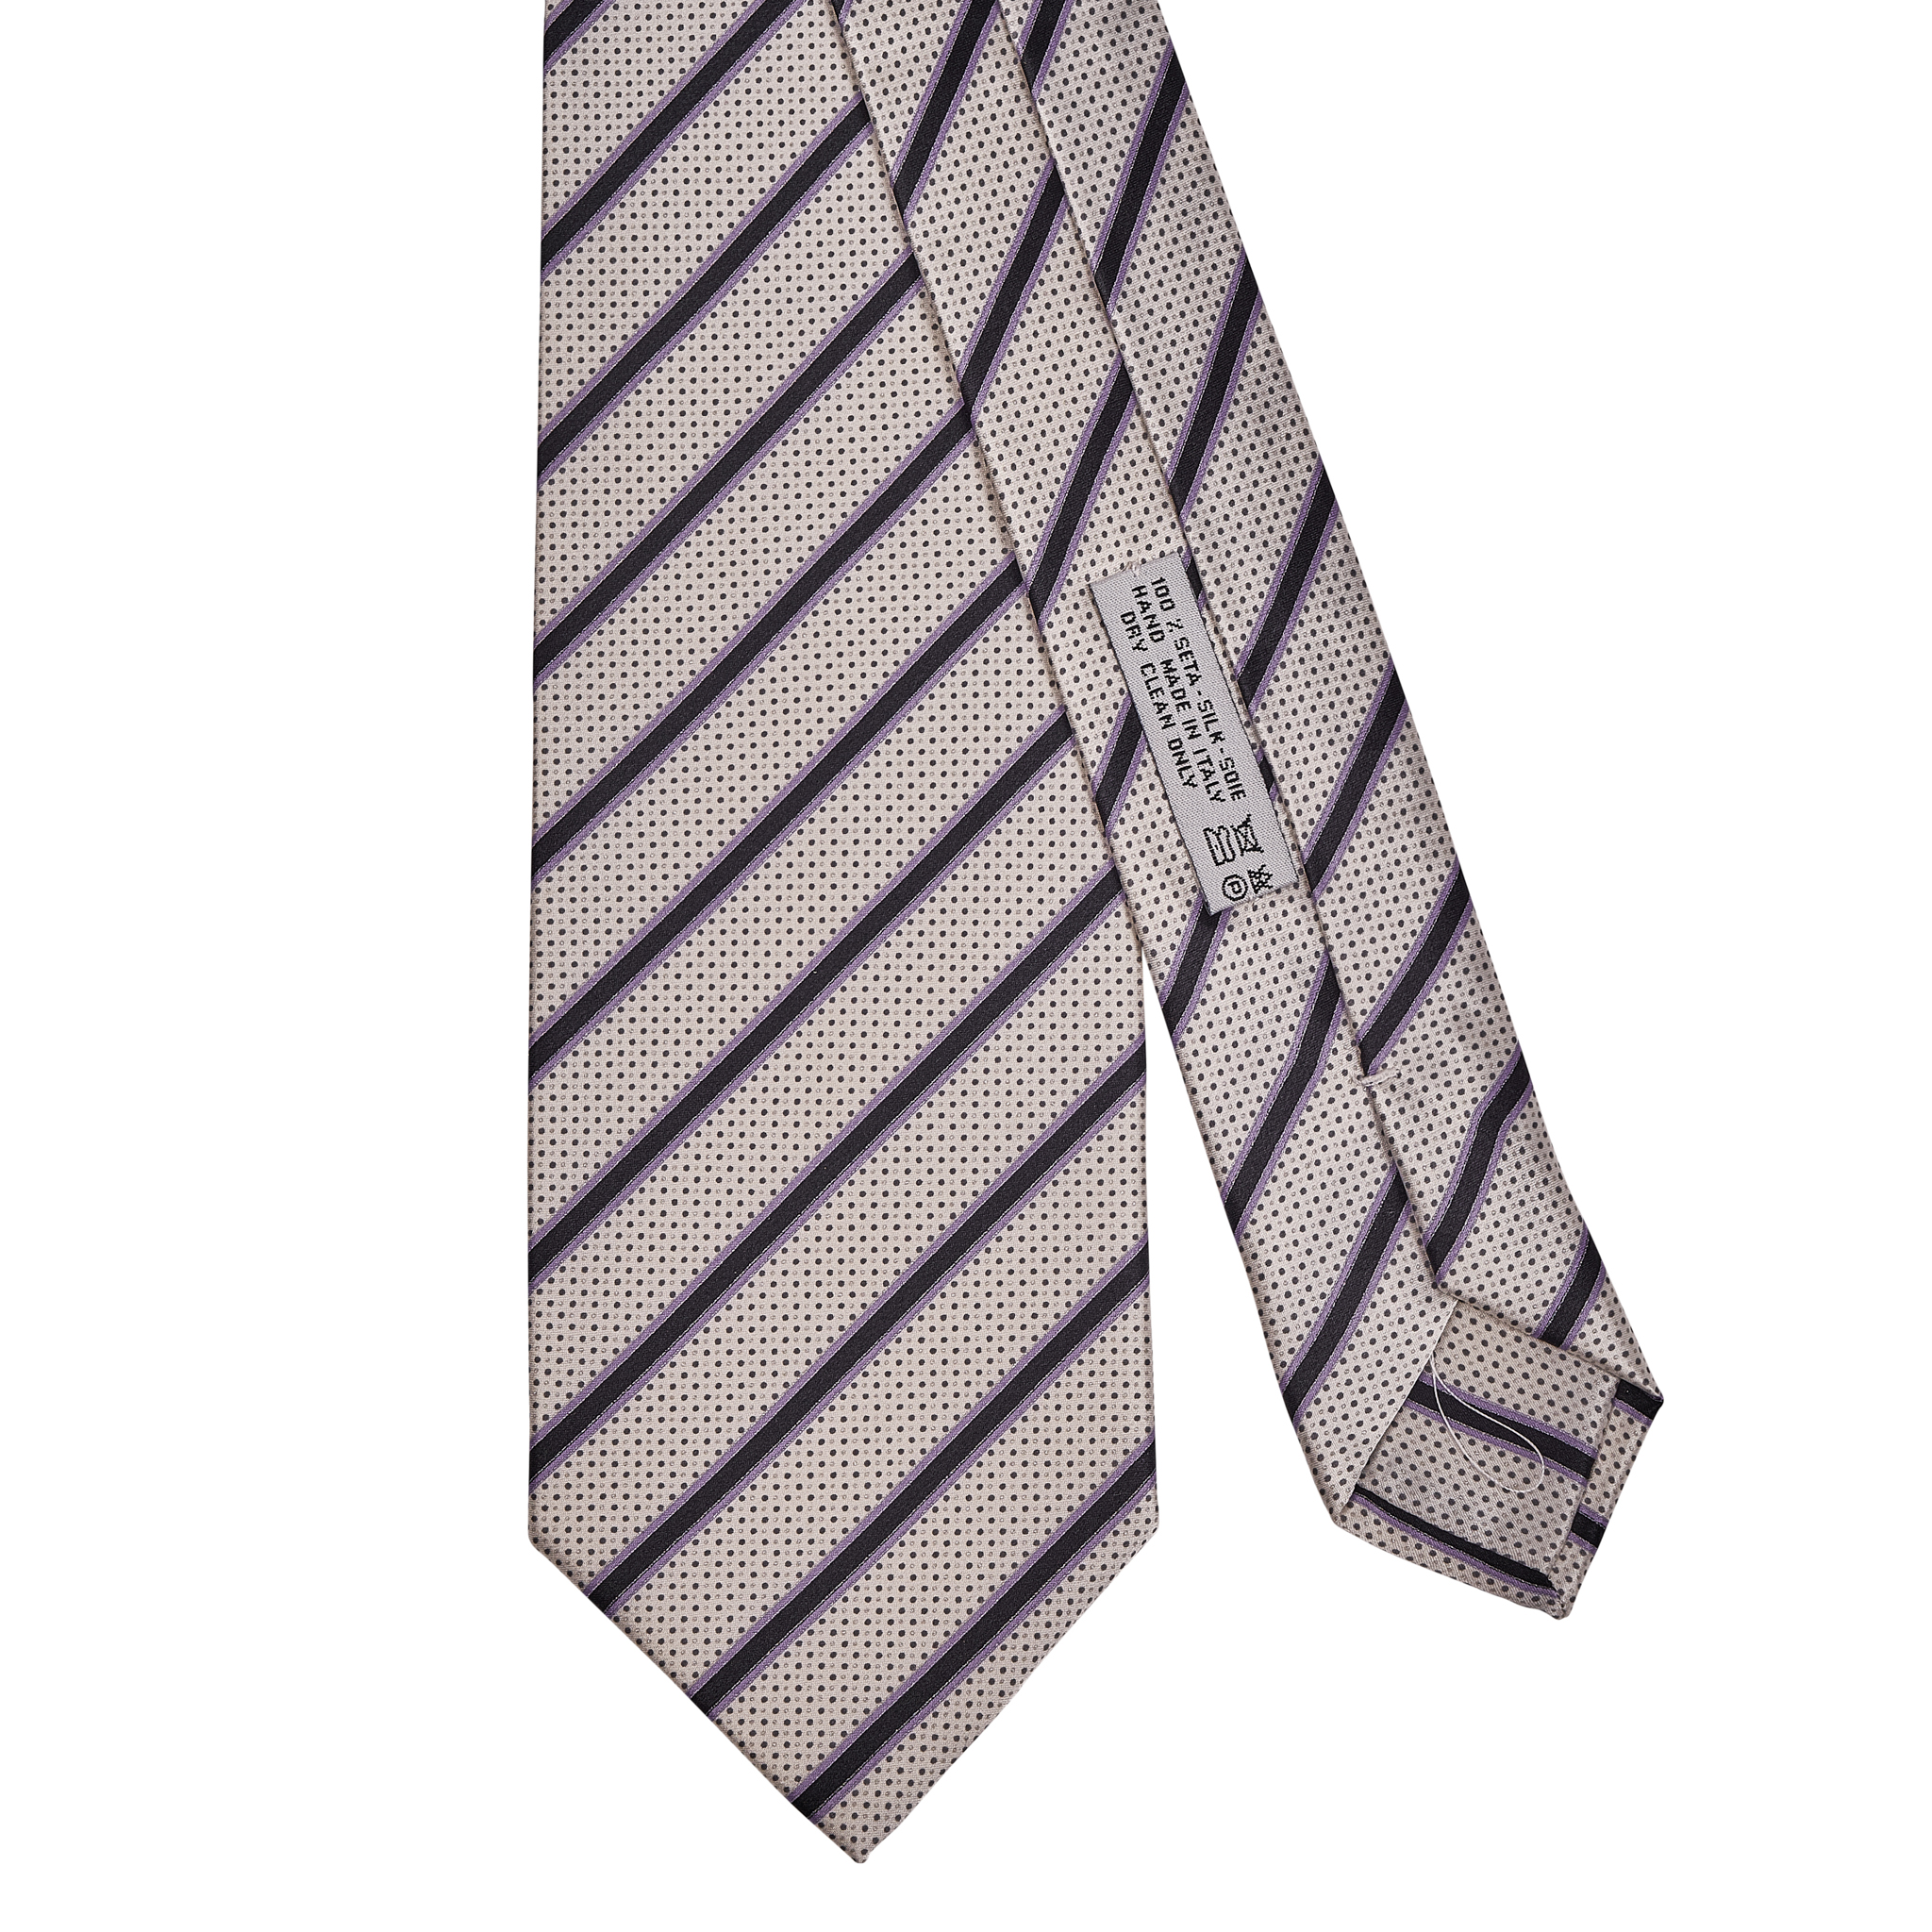 $220 ITALO FERRETTI x GERLIN Tie Striped Satin Silk Light Grey Handmade ...